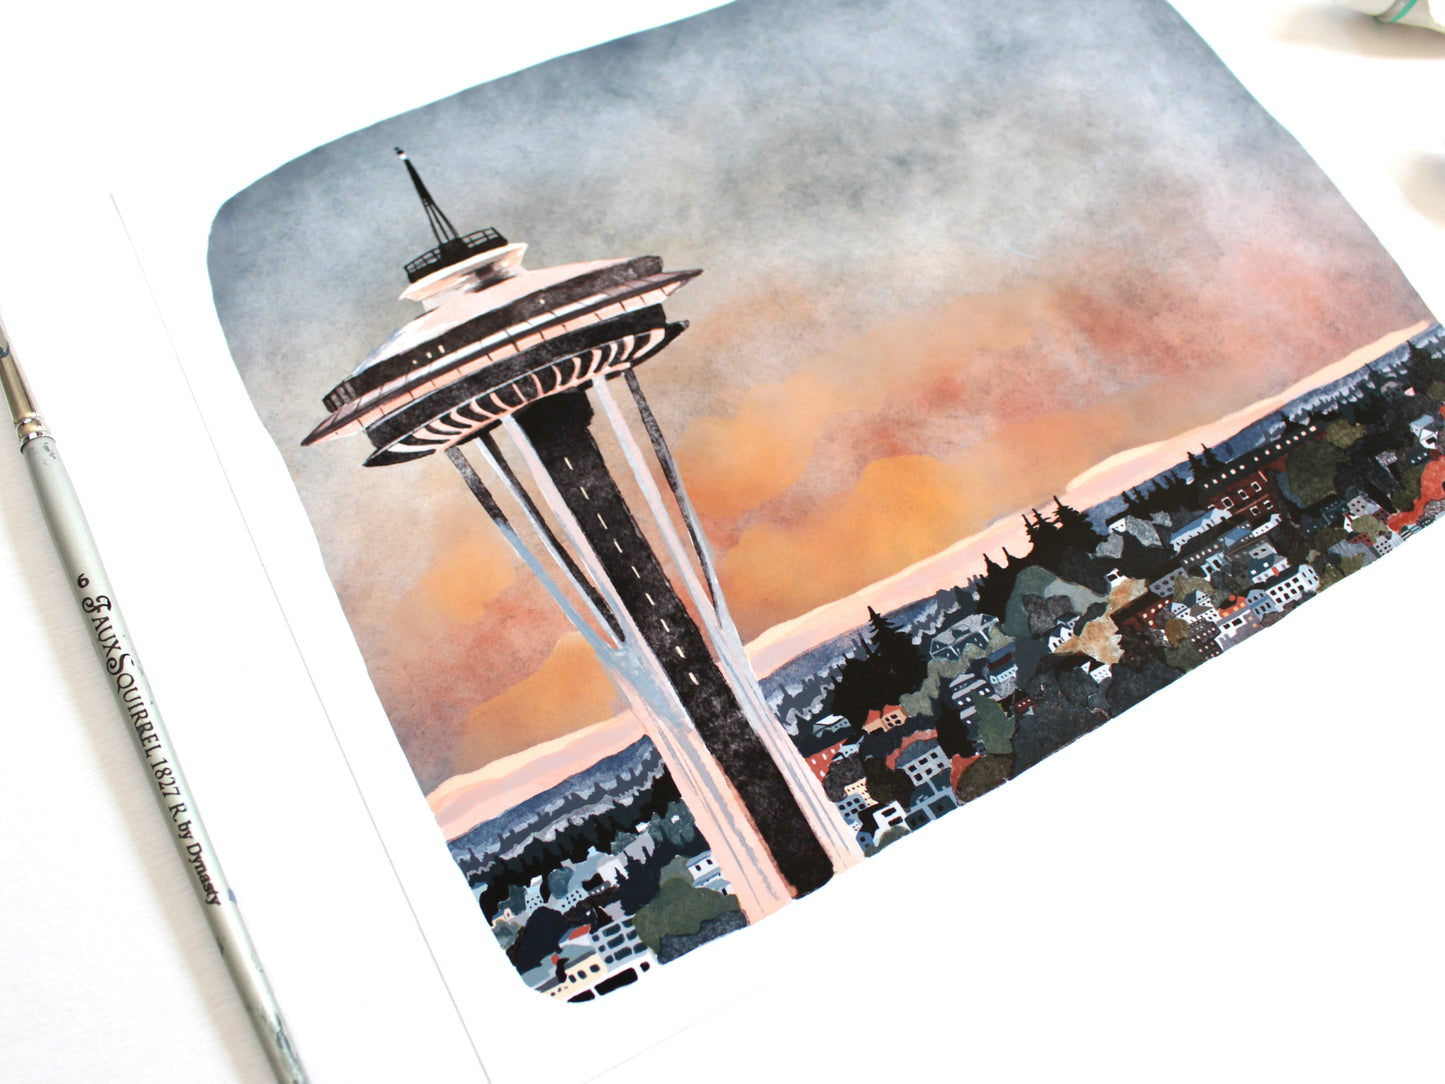 8x10" Print - Seattle Space Needle Sunset